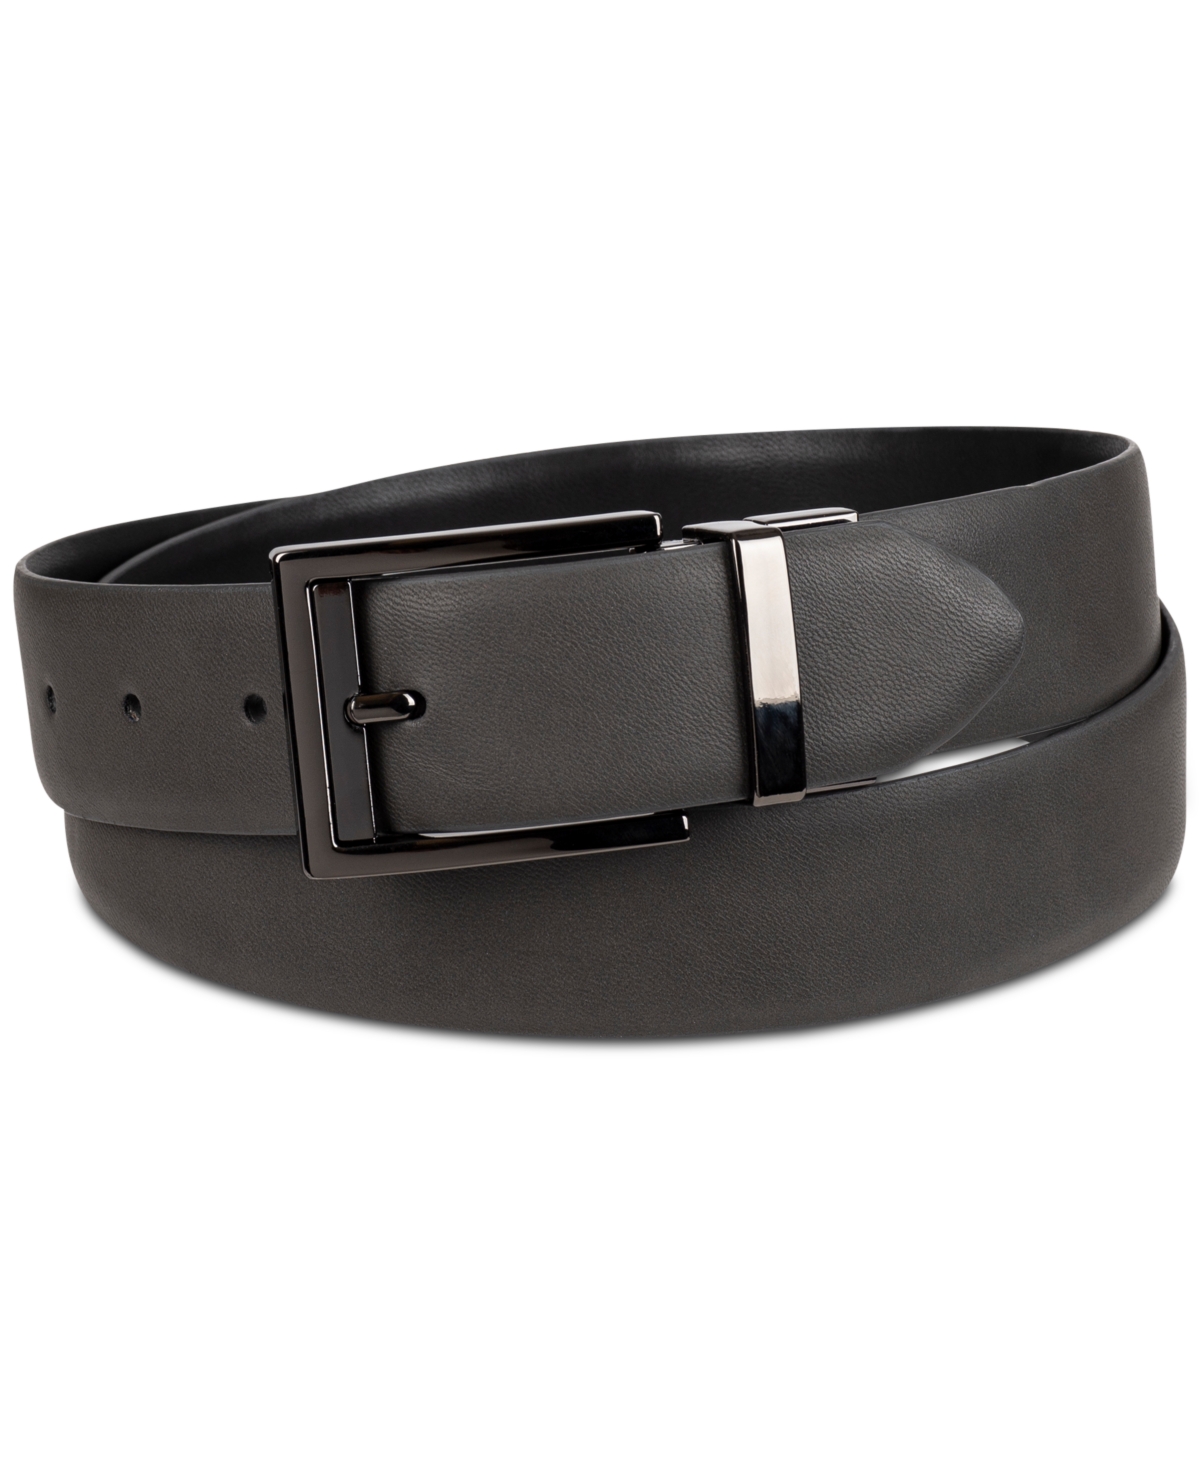 Men's Belt, Created for Macy's - Grey/black